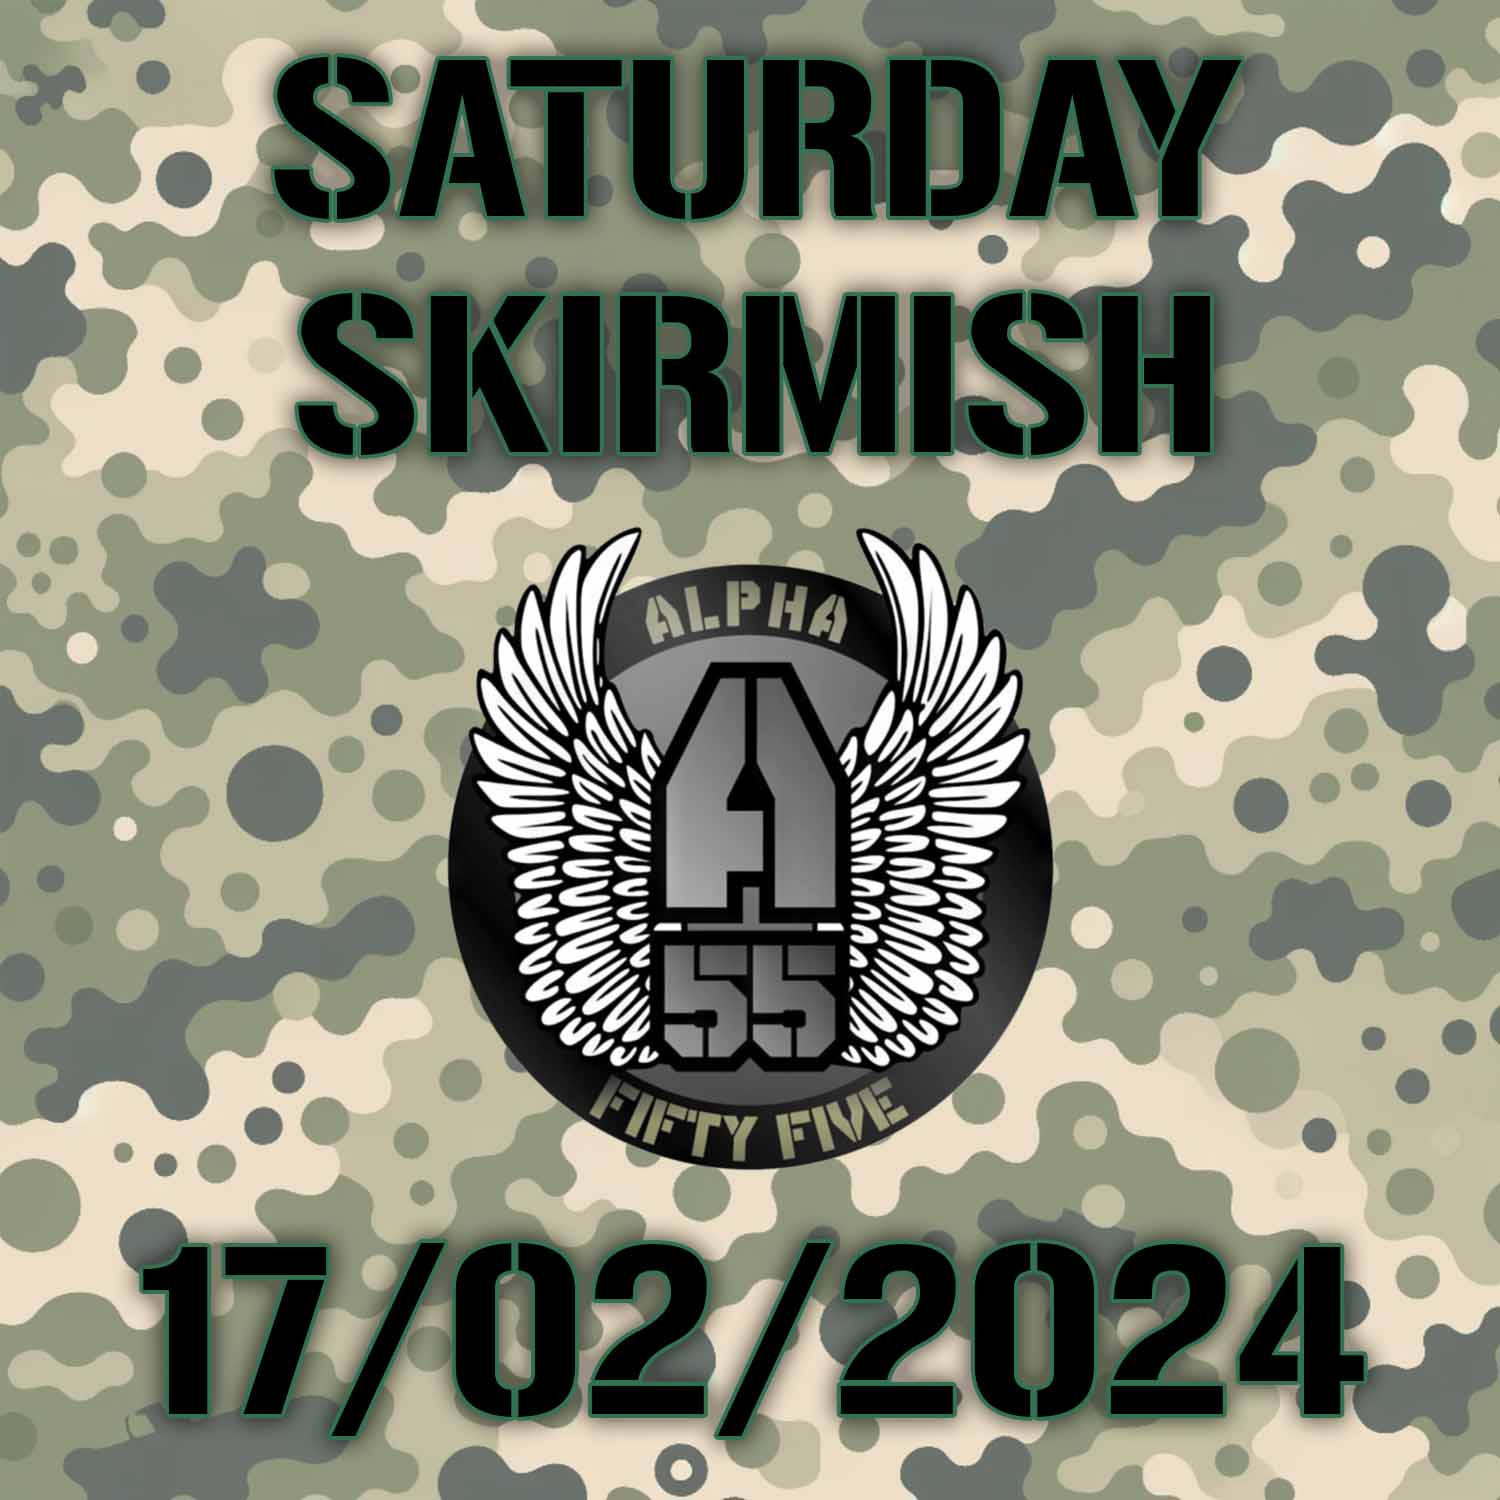 Saturday 'Skirmish' - 17/02/2024